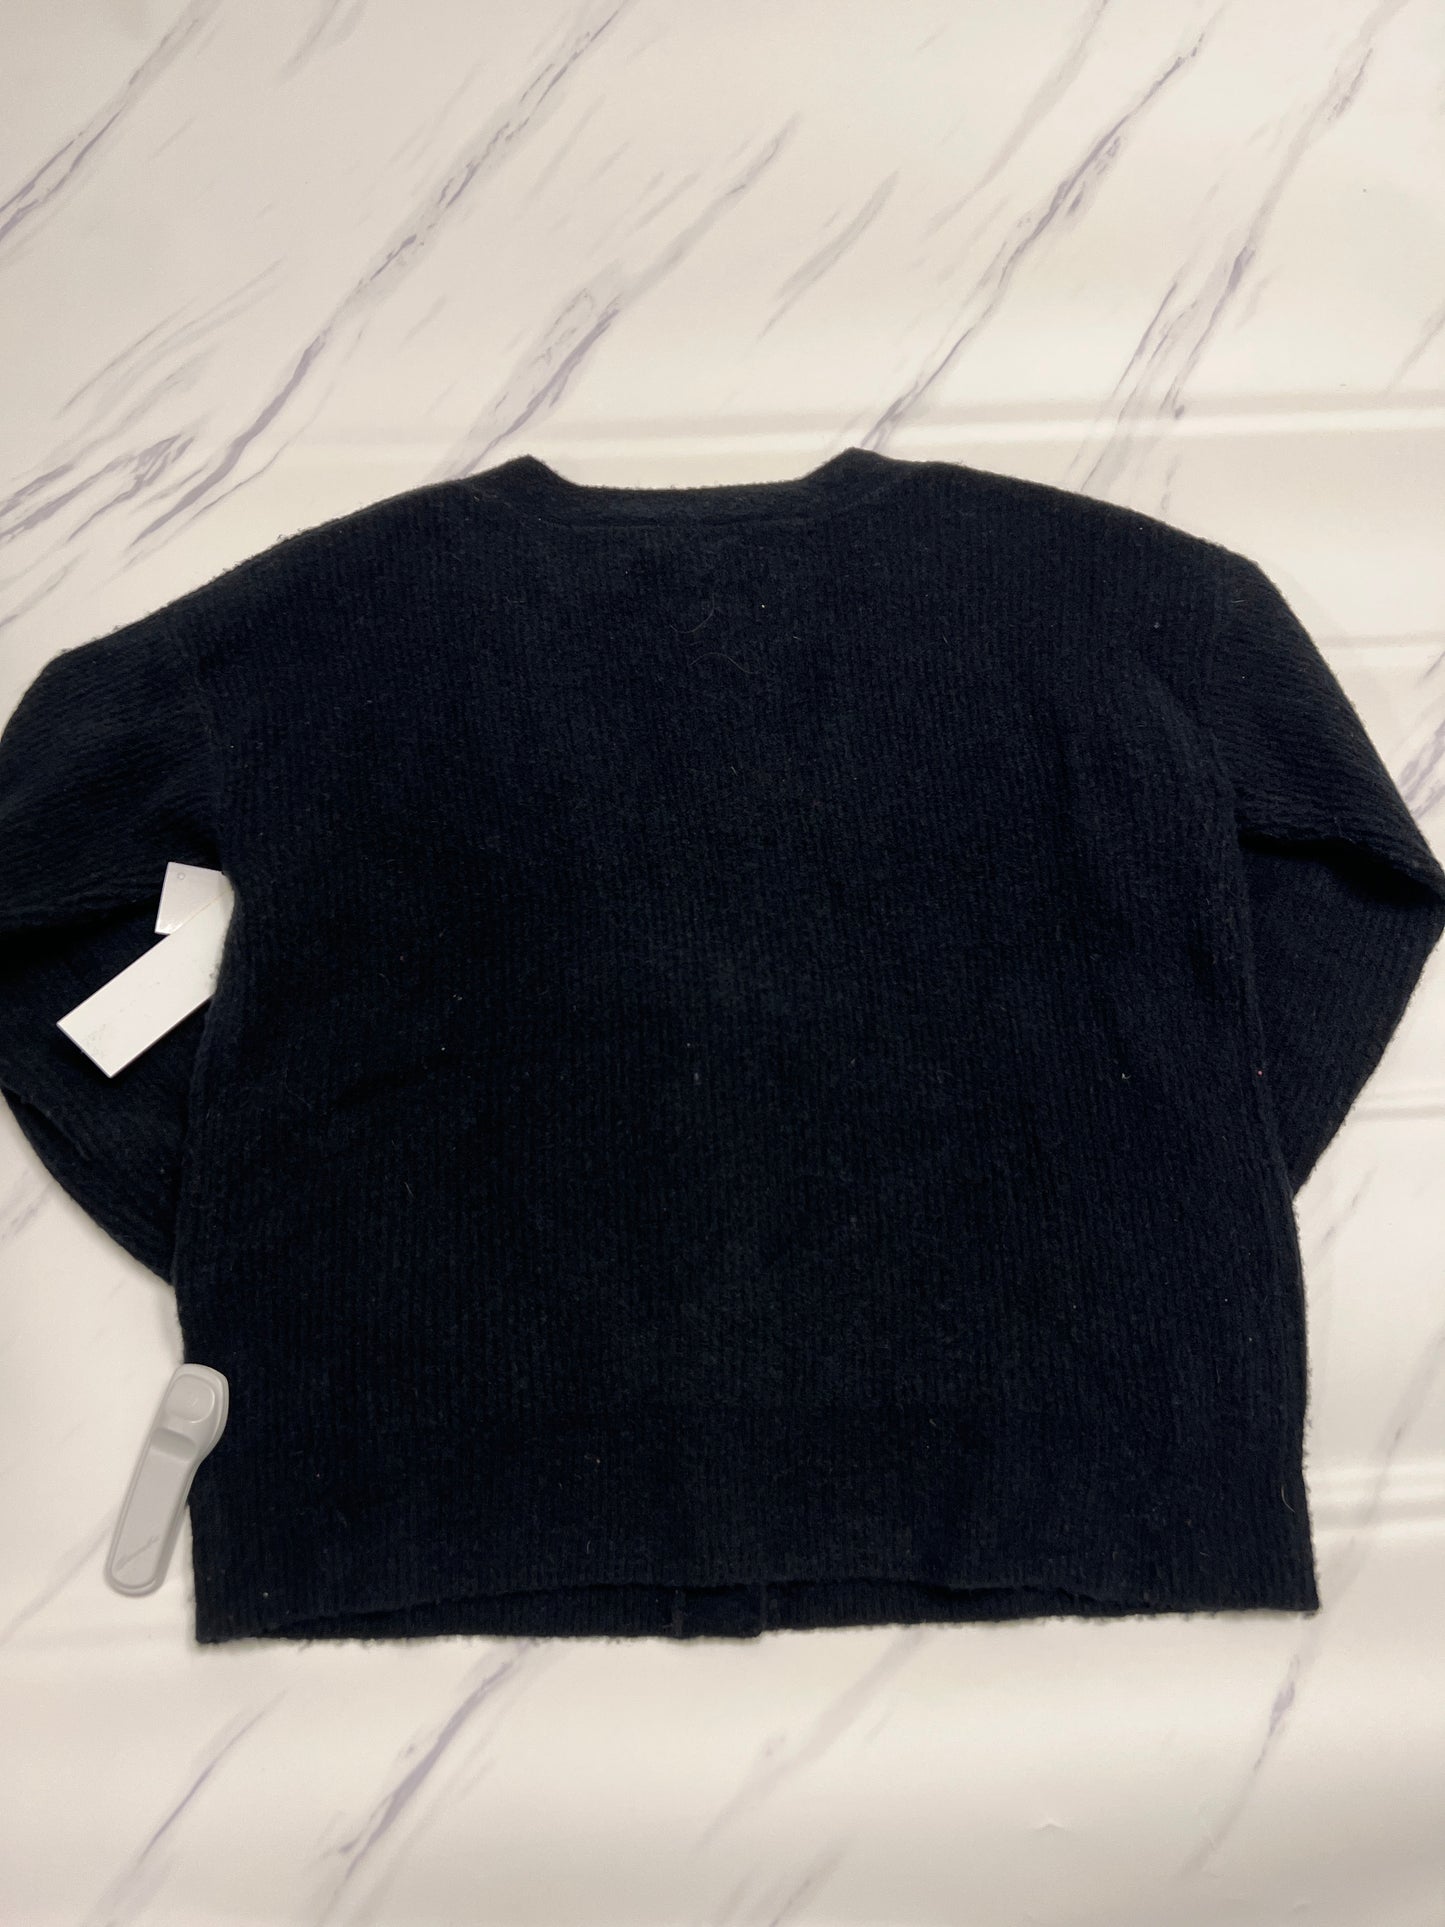 Sweater Cardigan By Vineyard Vines  Size: M